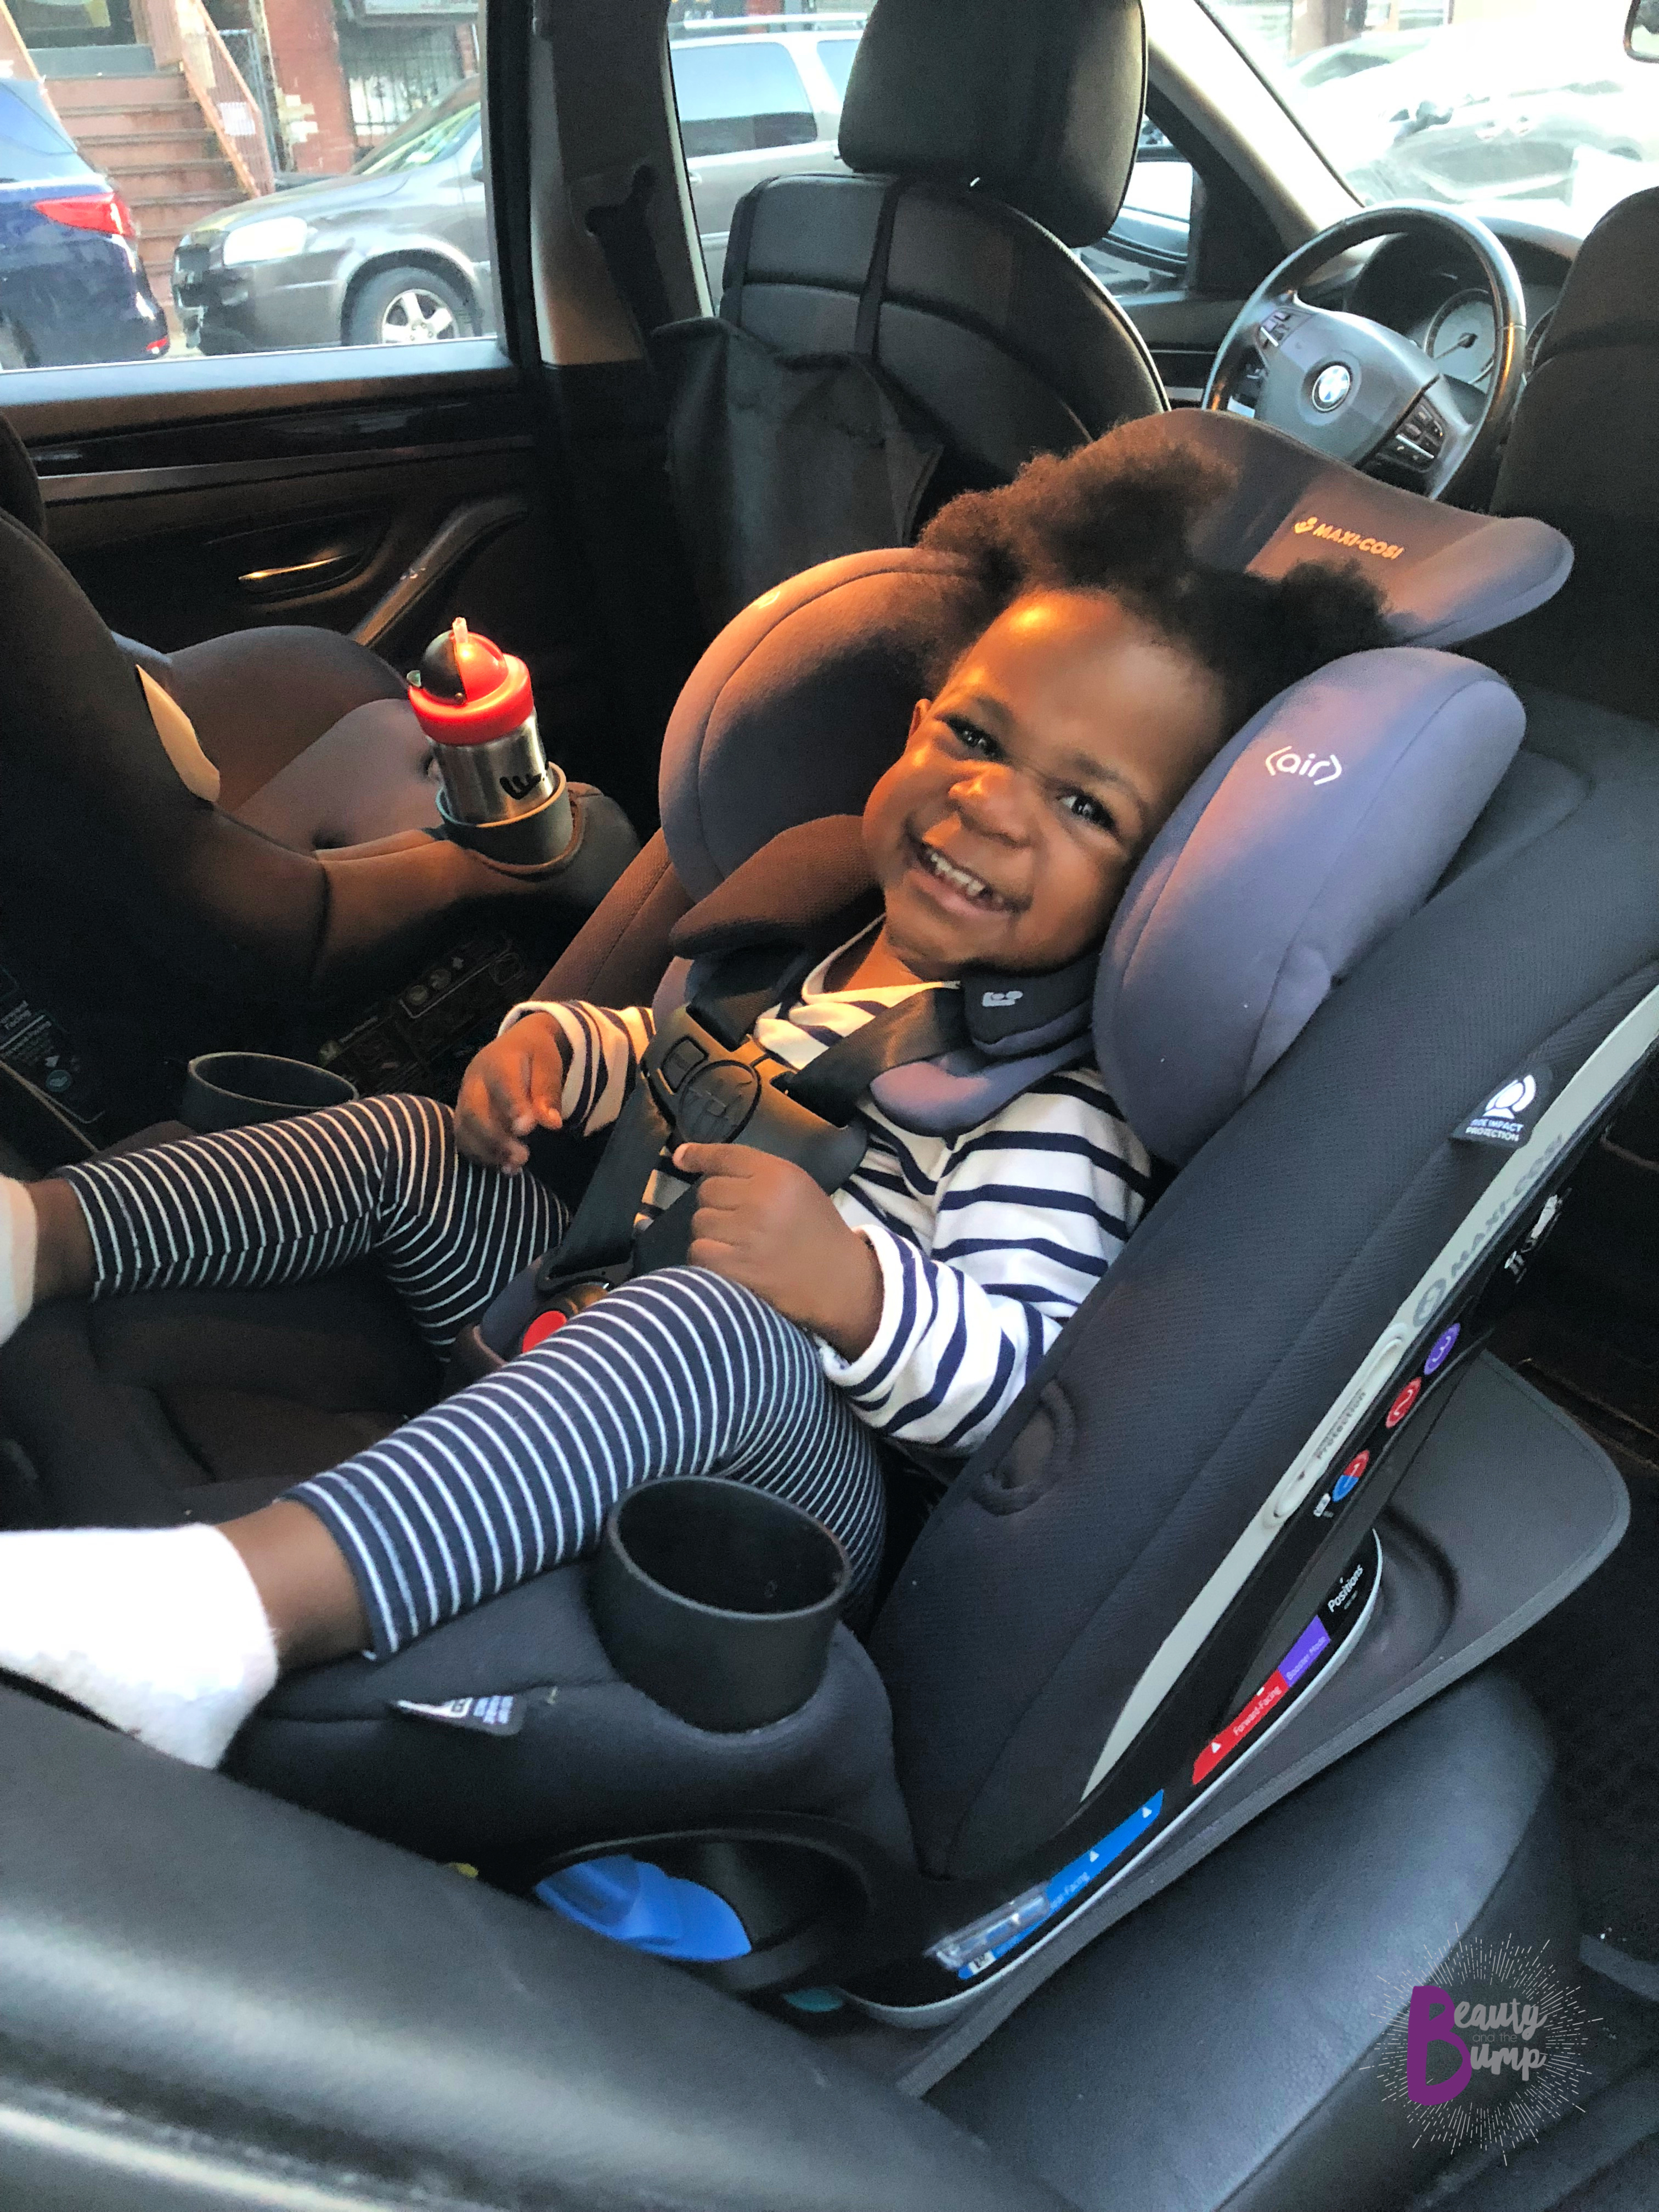 Maxi Cosi Opal Convertible Car Seat (Black) - Baby Needs Online